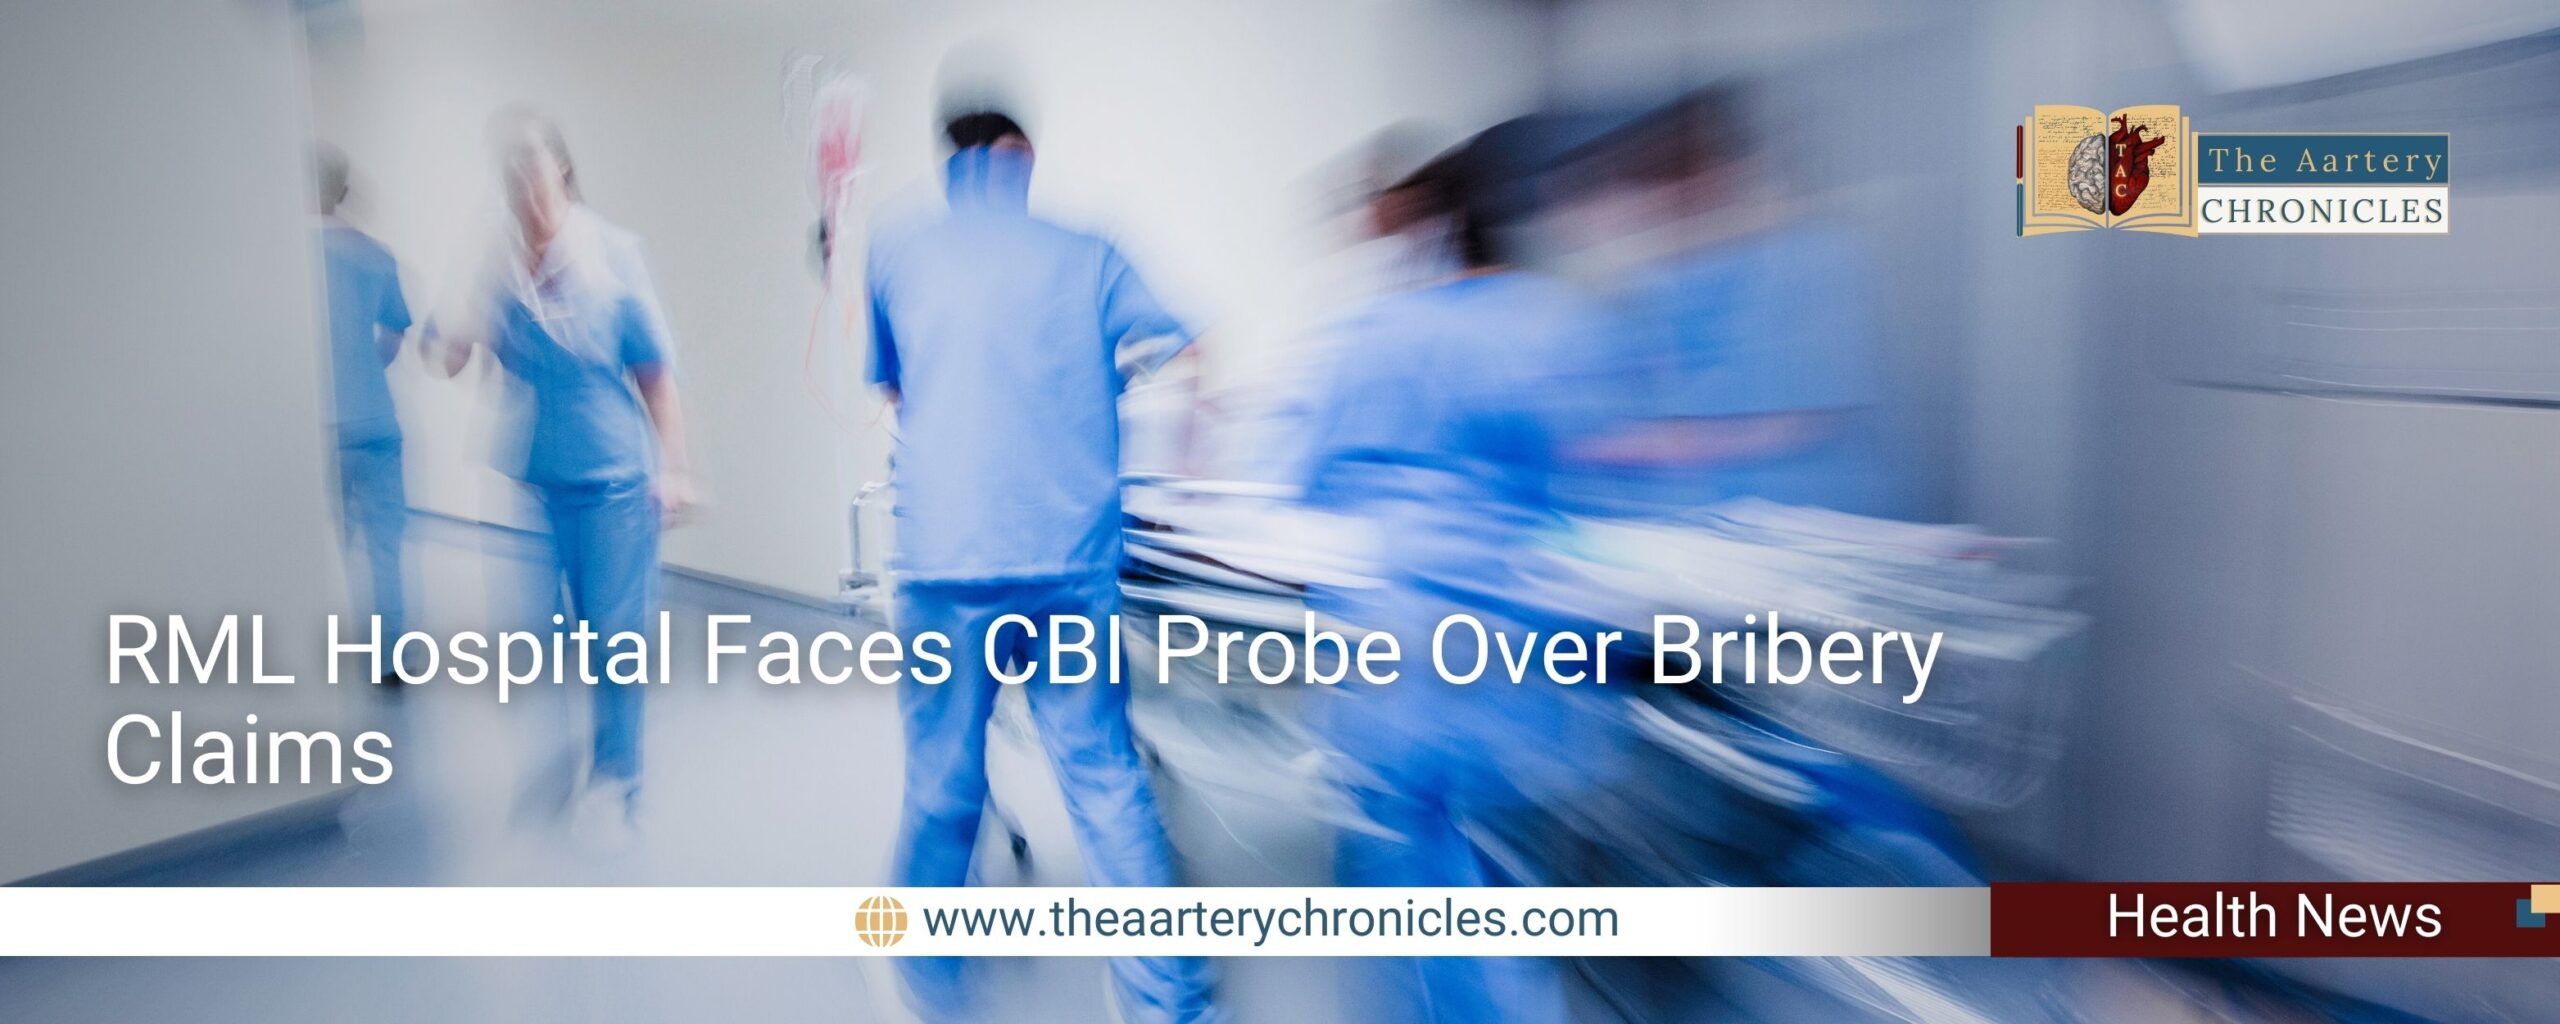 RML-Hospital-Faces-CBI-Probe-Over-Bribery-Claims-the-aartery-chronicles-tac